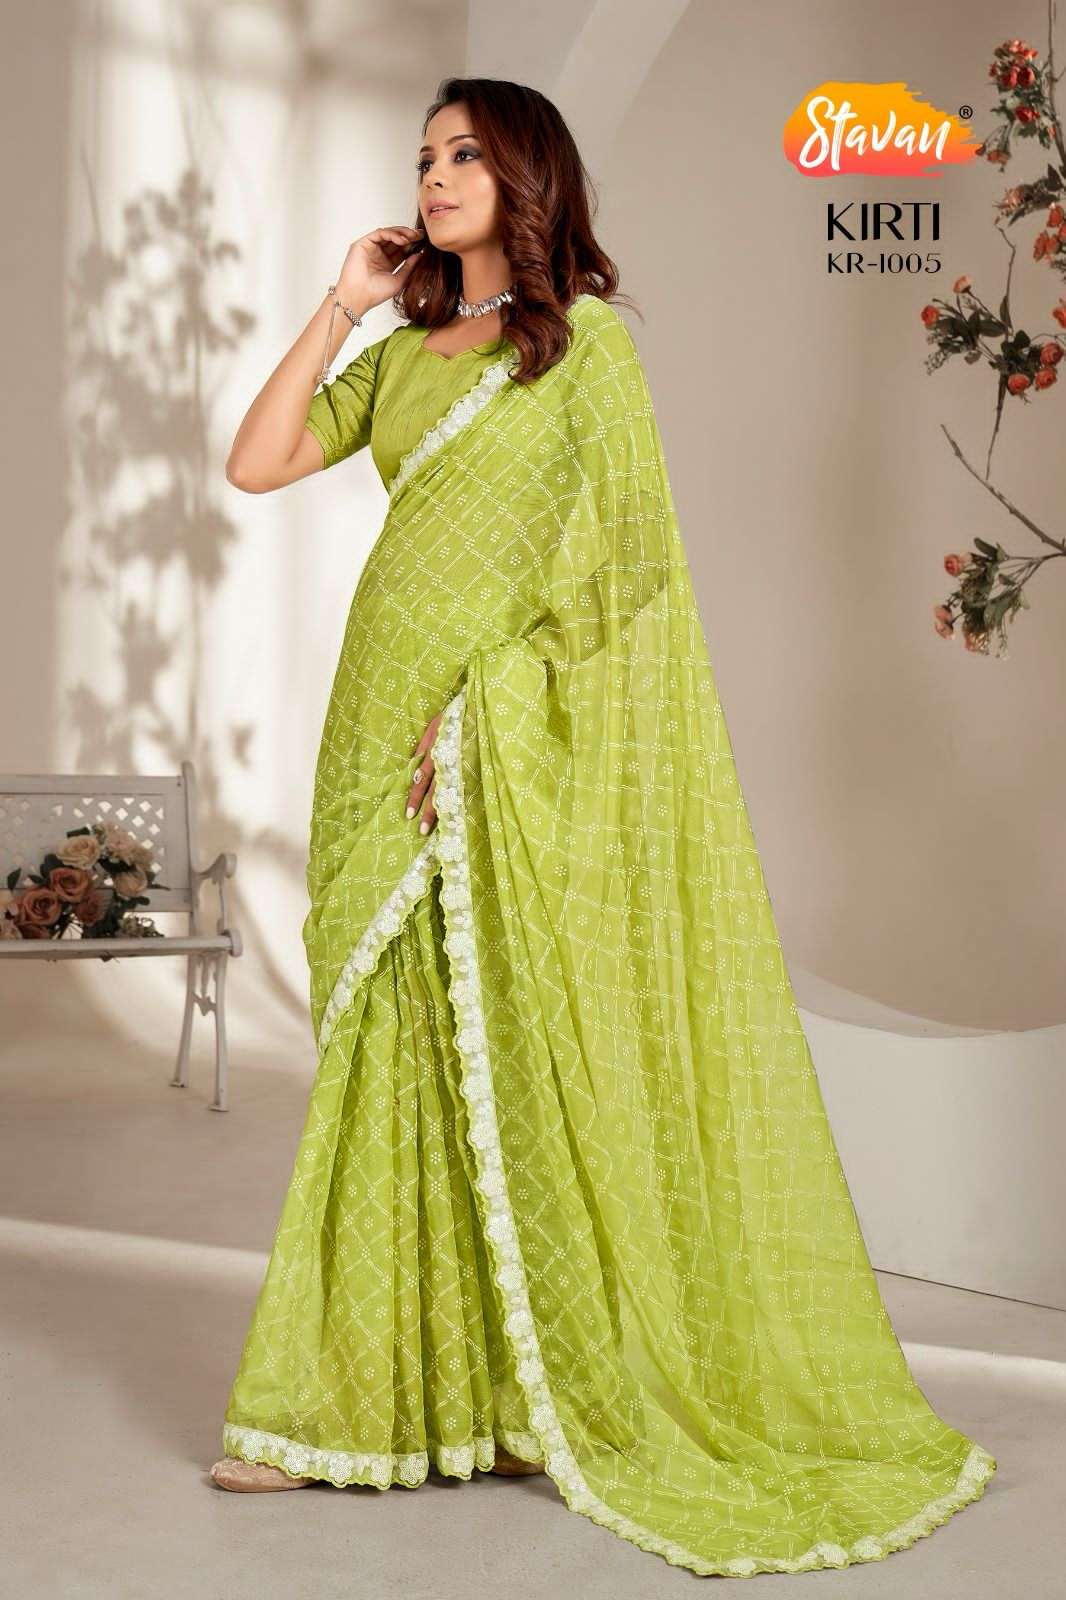 saree catlogue kirti fabric pure chiffon fabric with embroidery